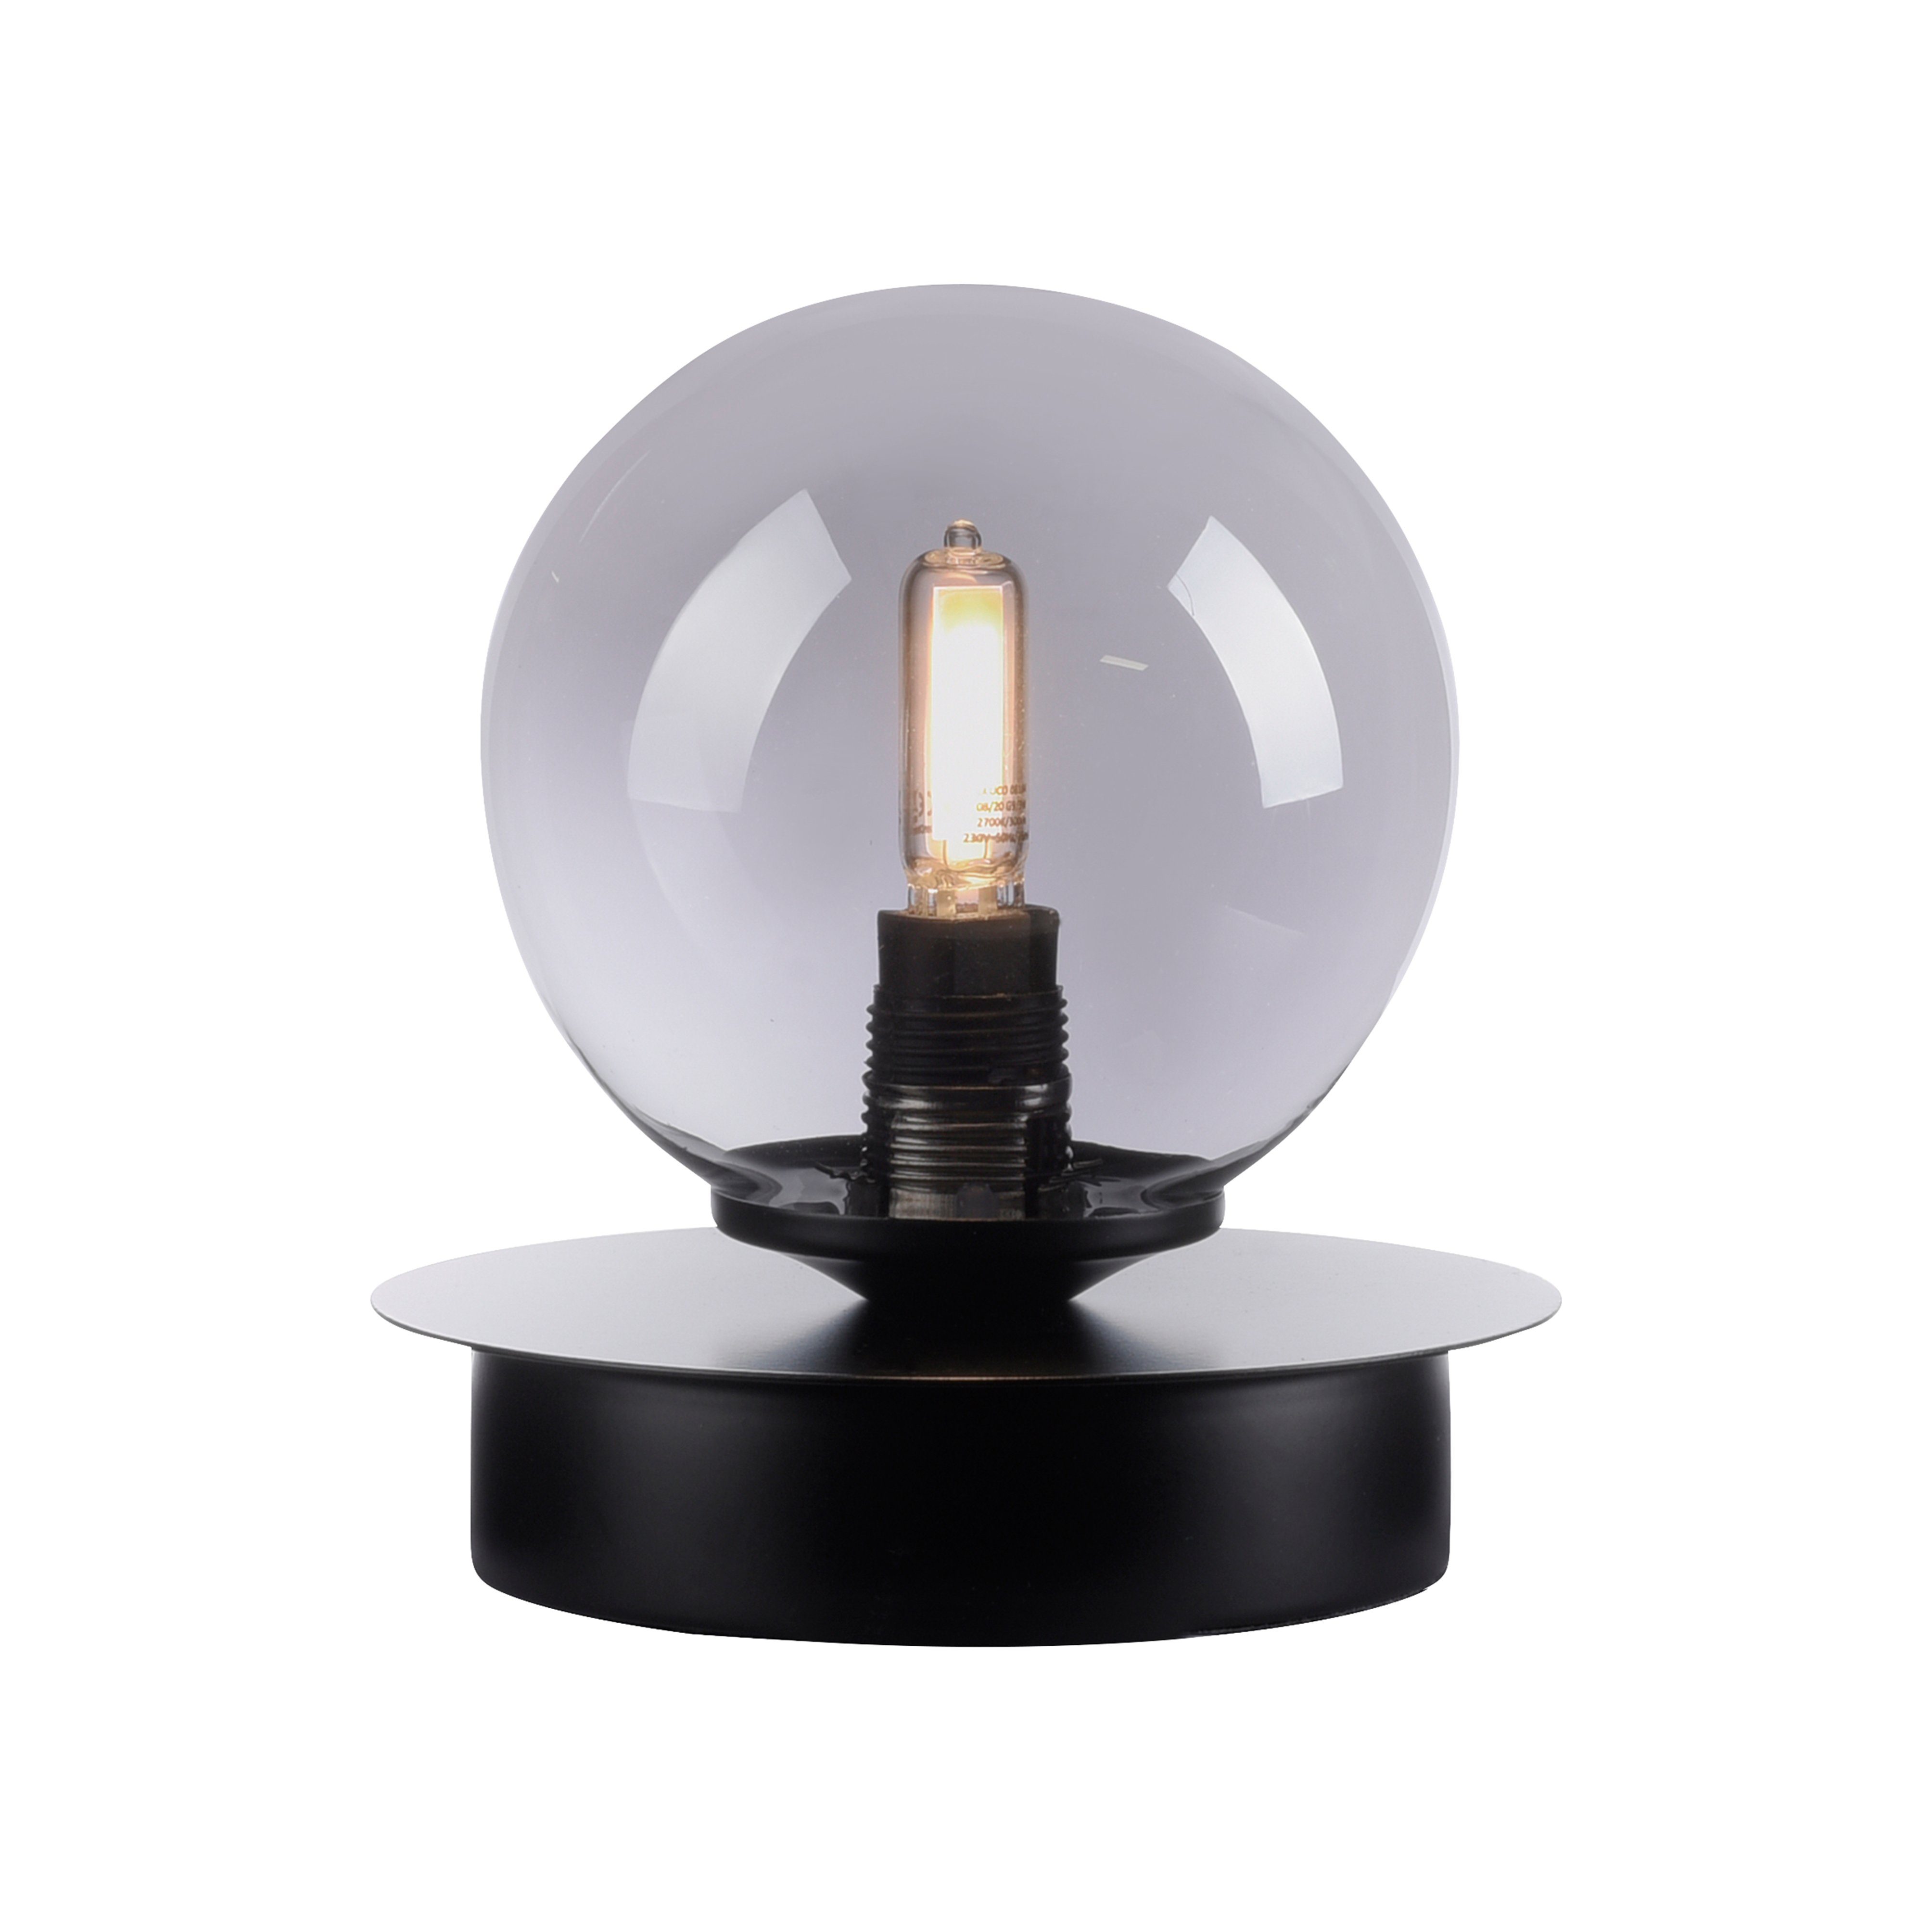 Paul Neuhaus LED Nachttischlampe WIDOW, wechselbar, Warmweiß, Schalter, Schnurschalter LED